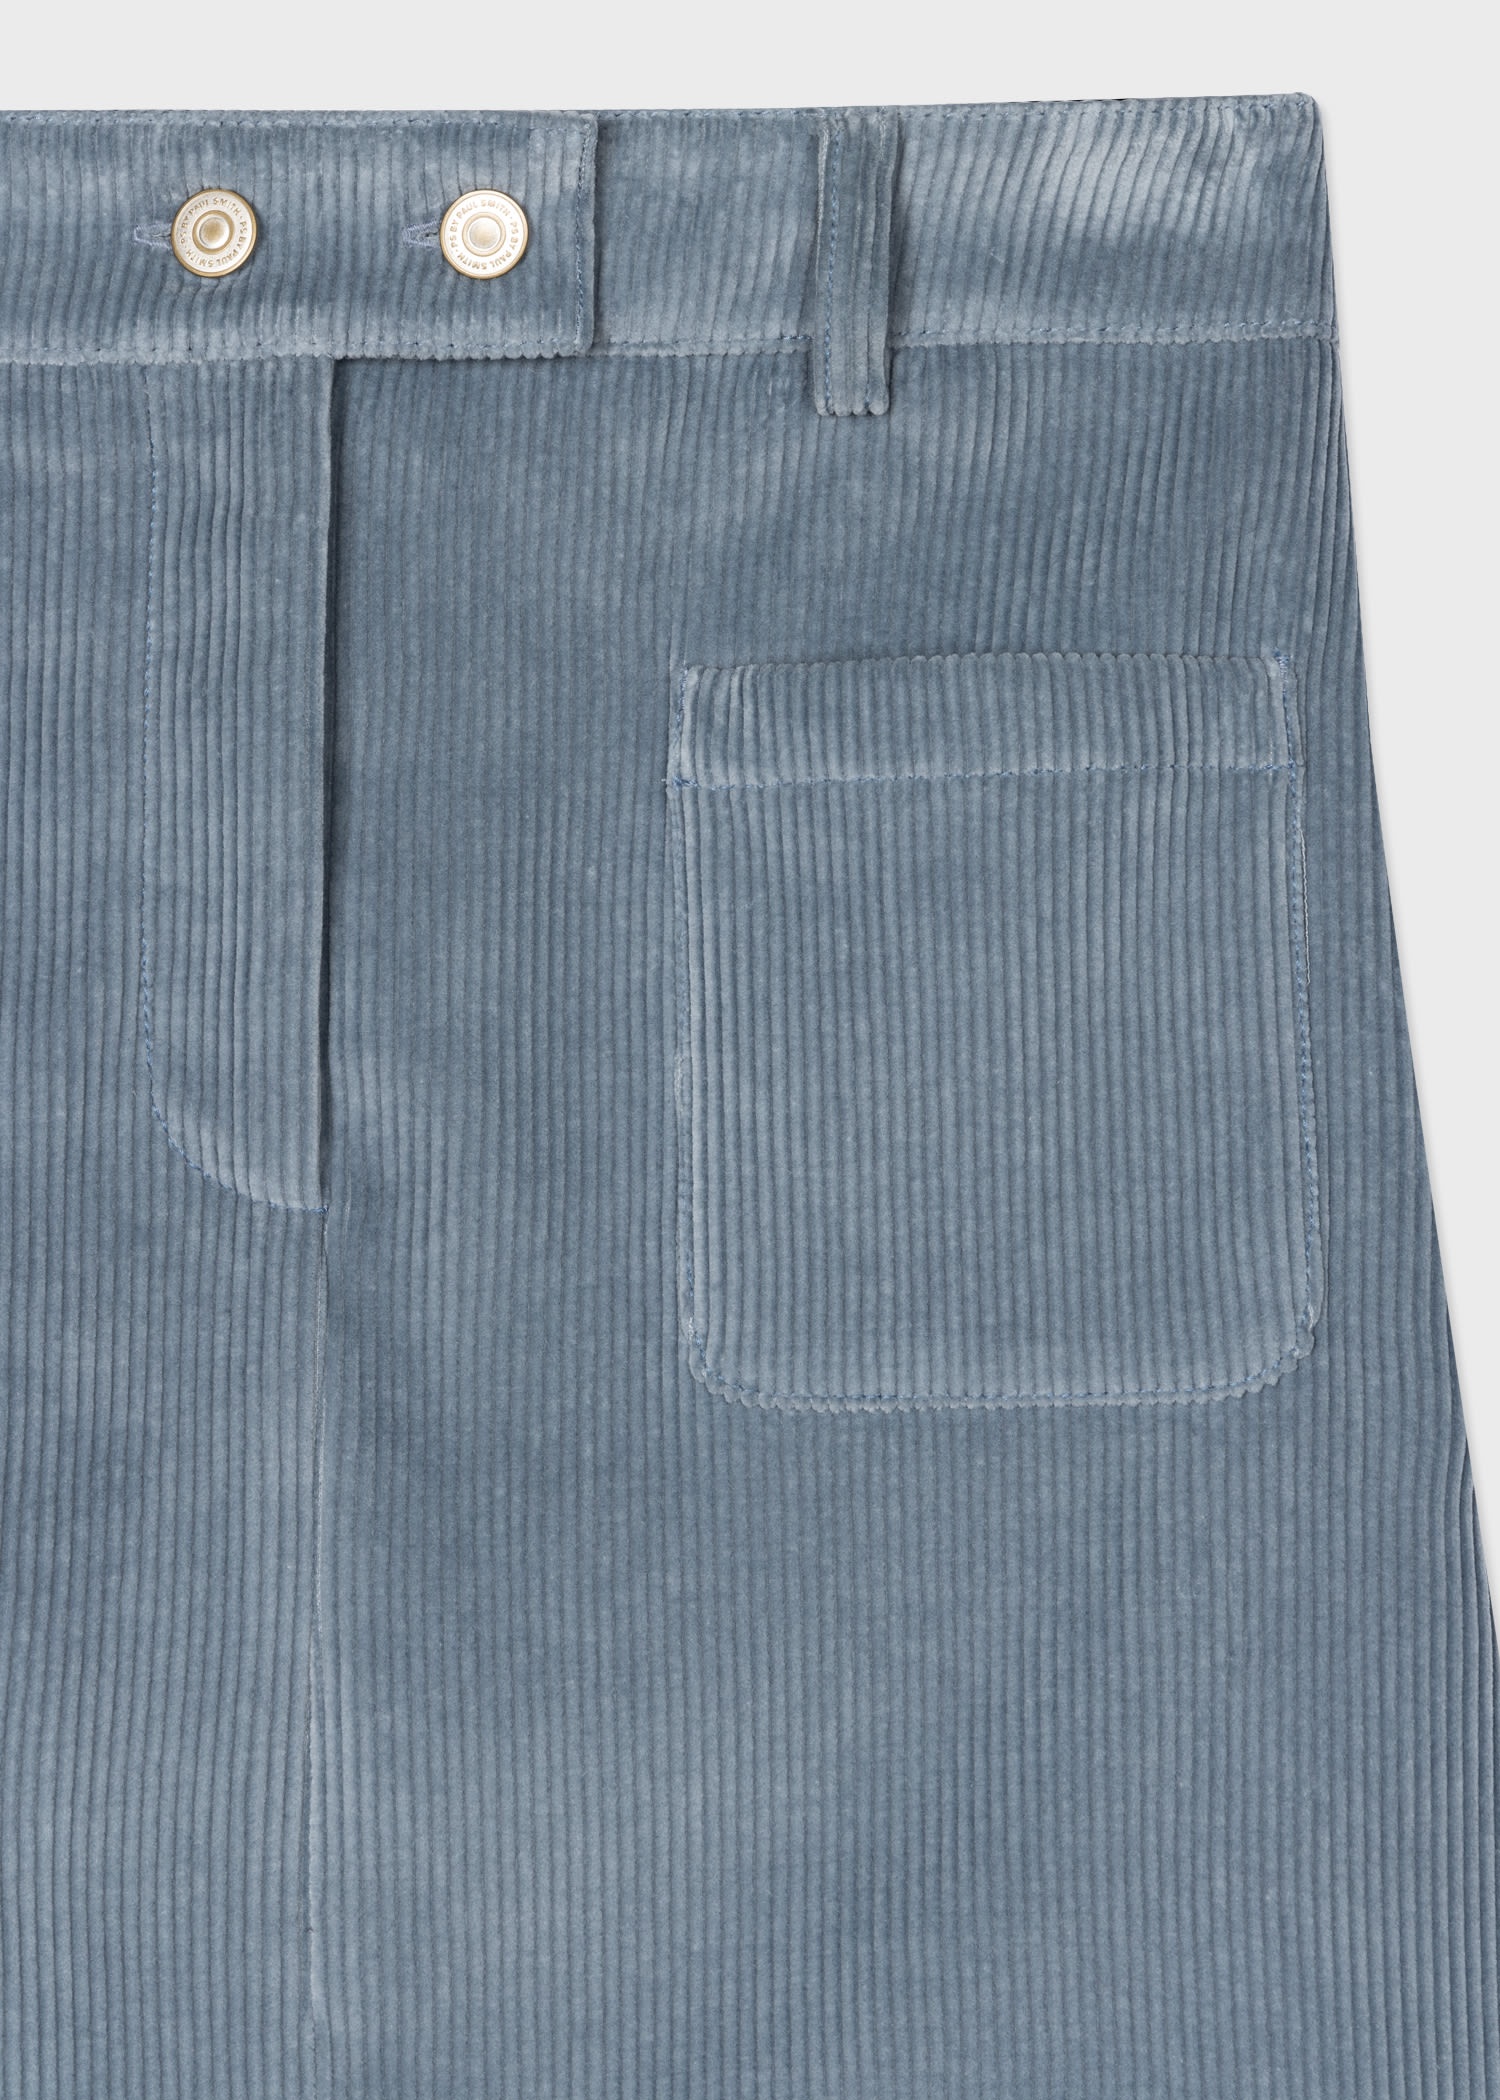 Blue Cotton Cord Skirt - 2